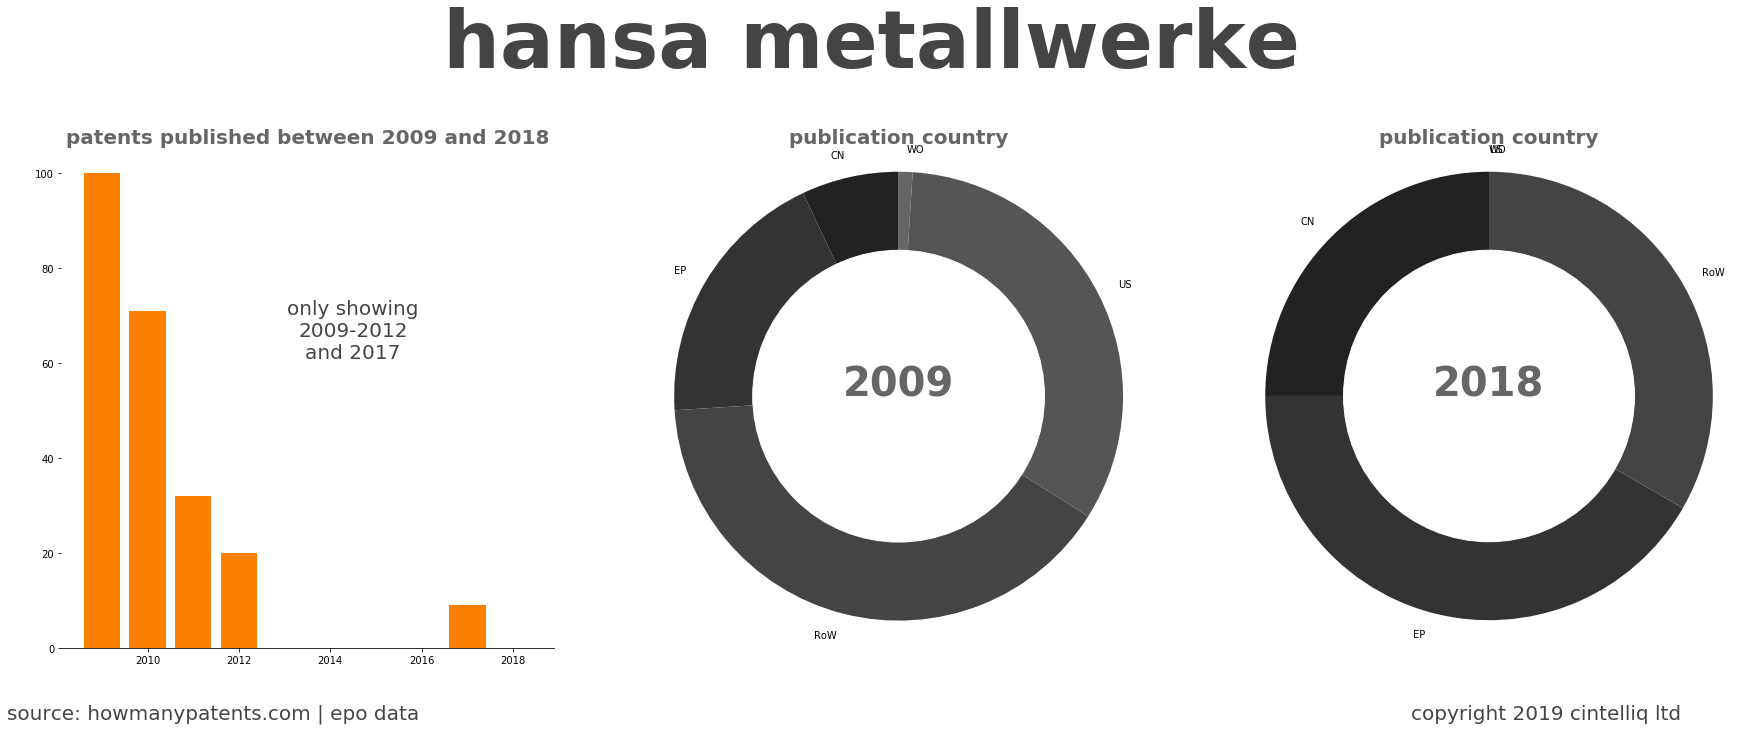 summary of patents for Hansa Metallwerke